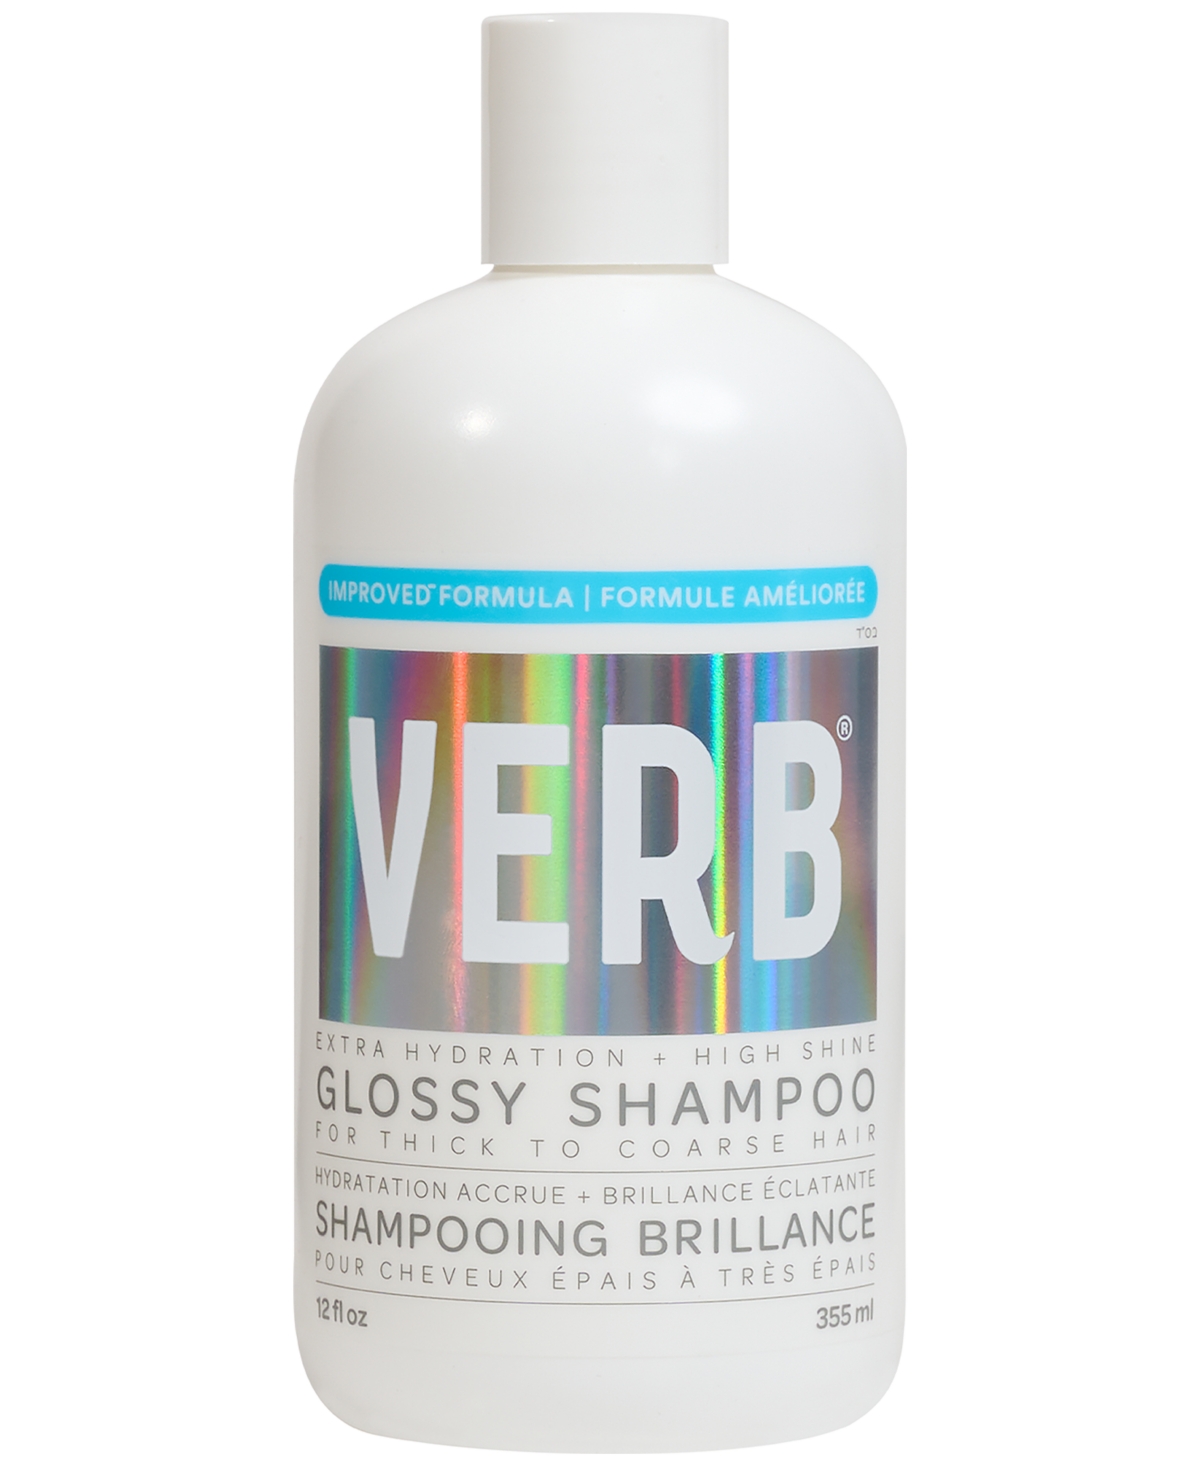 Glossy Shampoo, 12 oz.